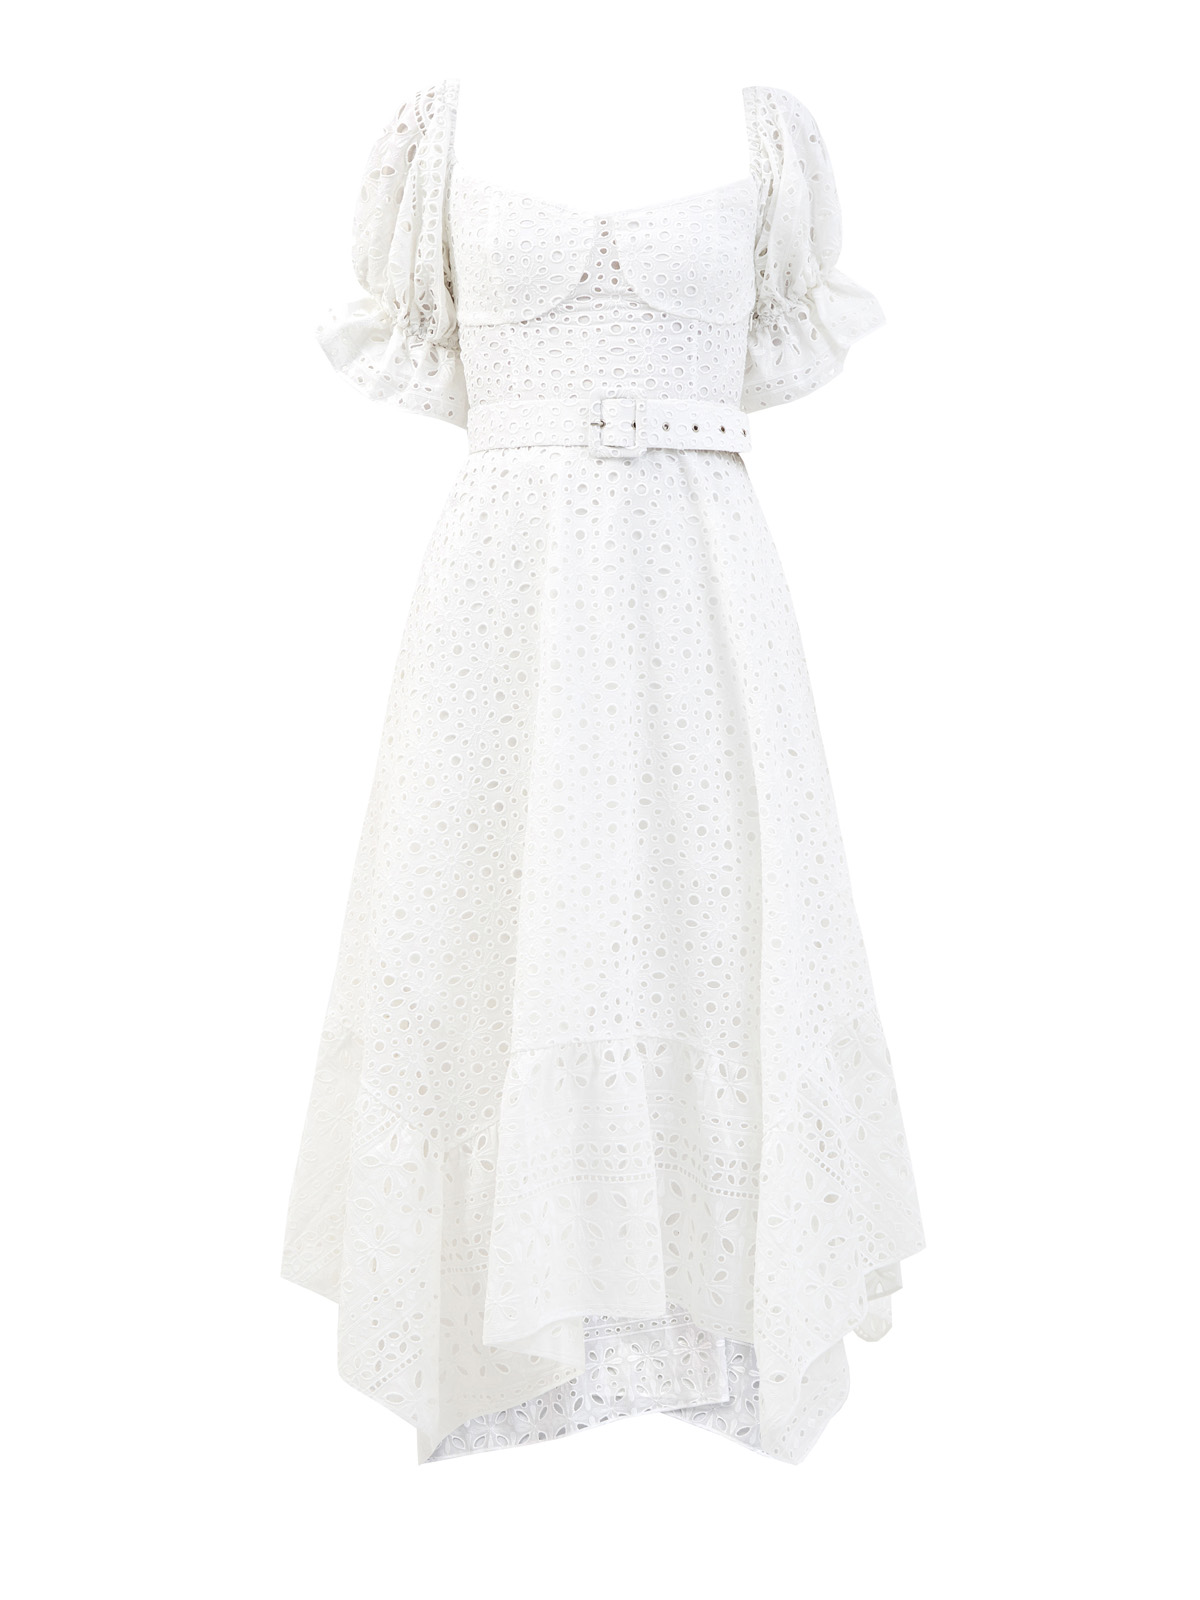 Белое платье из кружева broderie anglaise с объемными рукавами CHARO RUIZ IBIZA, цвет белый, размер S - фото 1